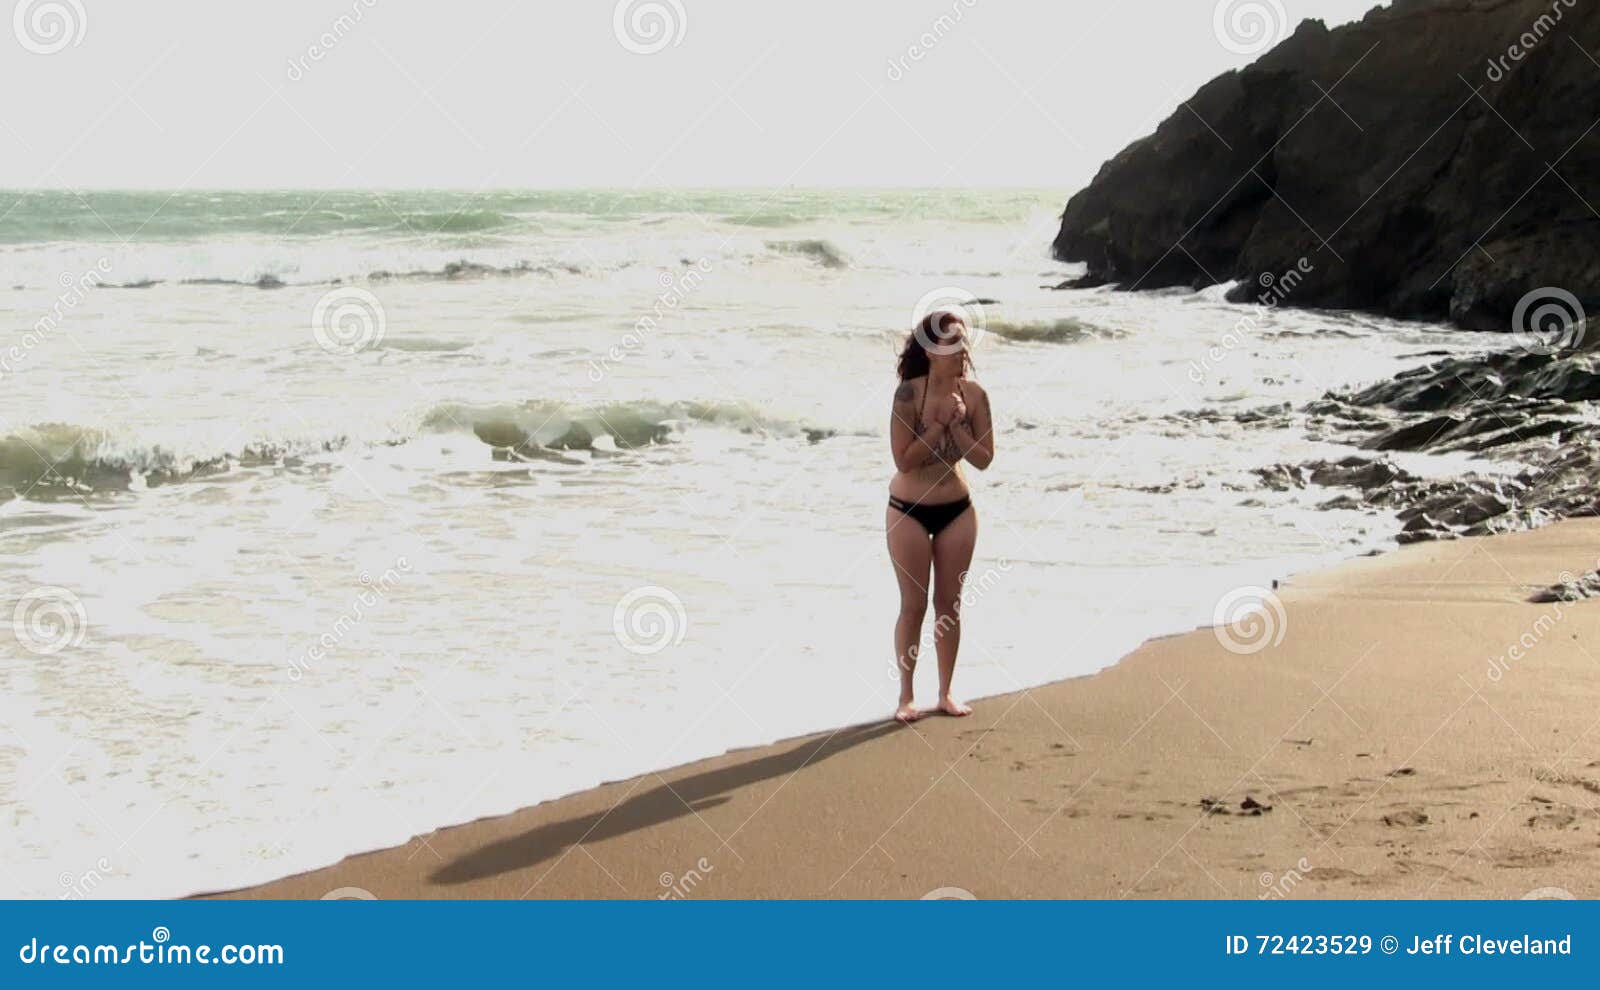 woman-standing-bikini-sandy-windy-beach-cold-rodeo-marin-california-72423529.jpg